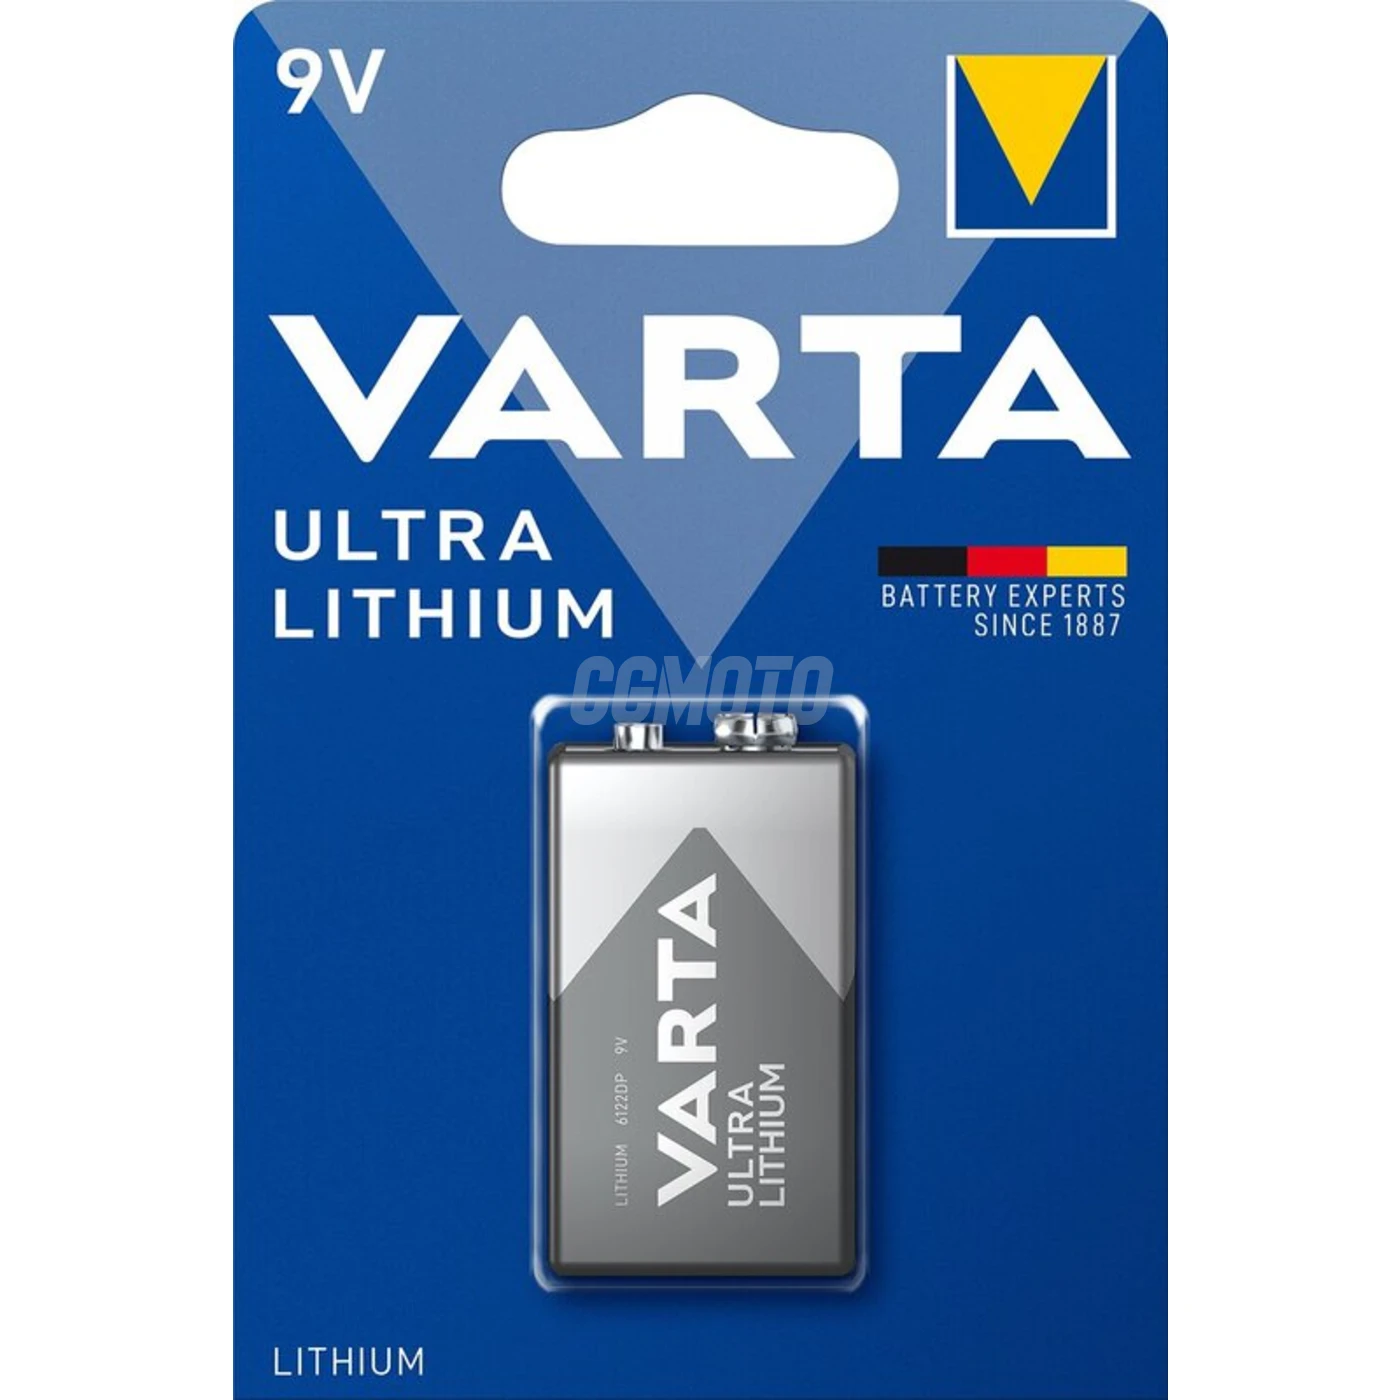 Varta lithium 9V x 1 pila (blister)